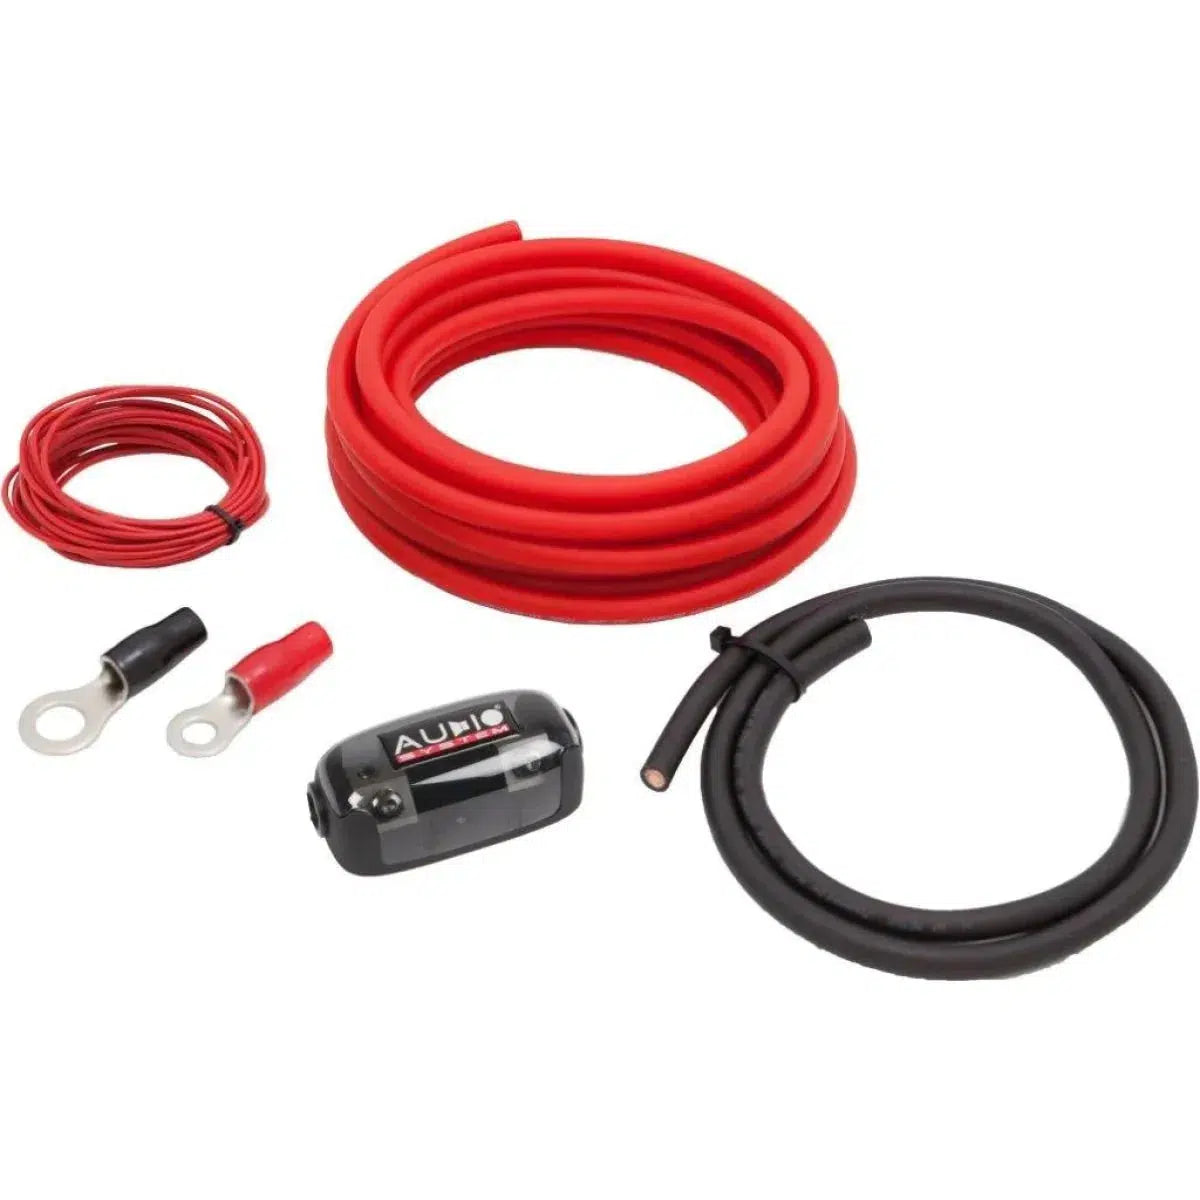 Cable de alimentación Audio System-Z-PCS 35 35mm² a 1800W-35mm²-Masori.de